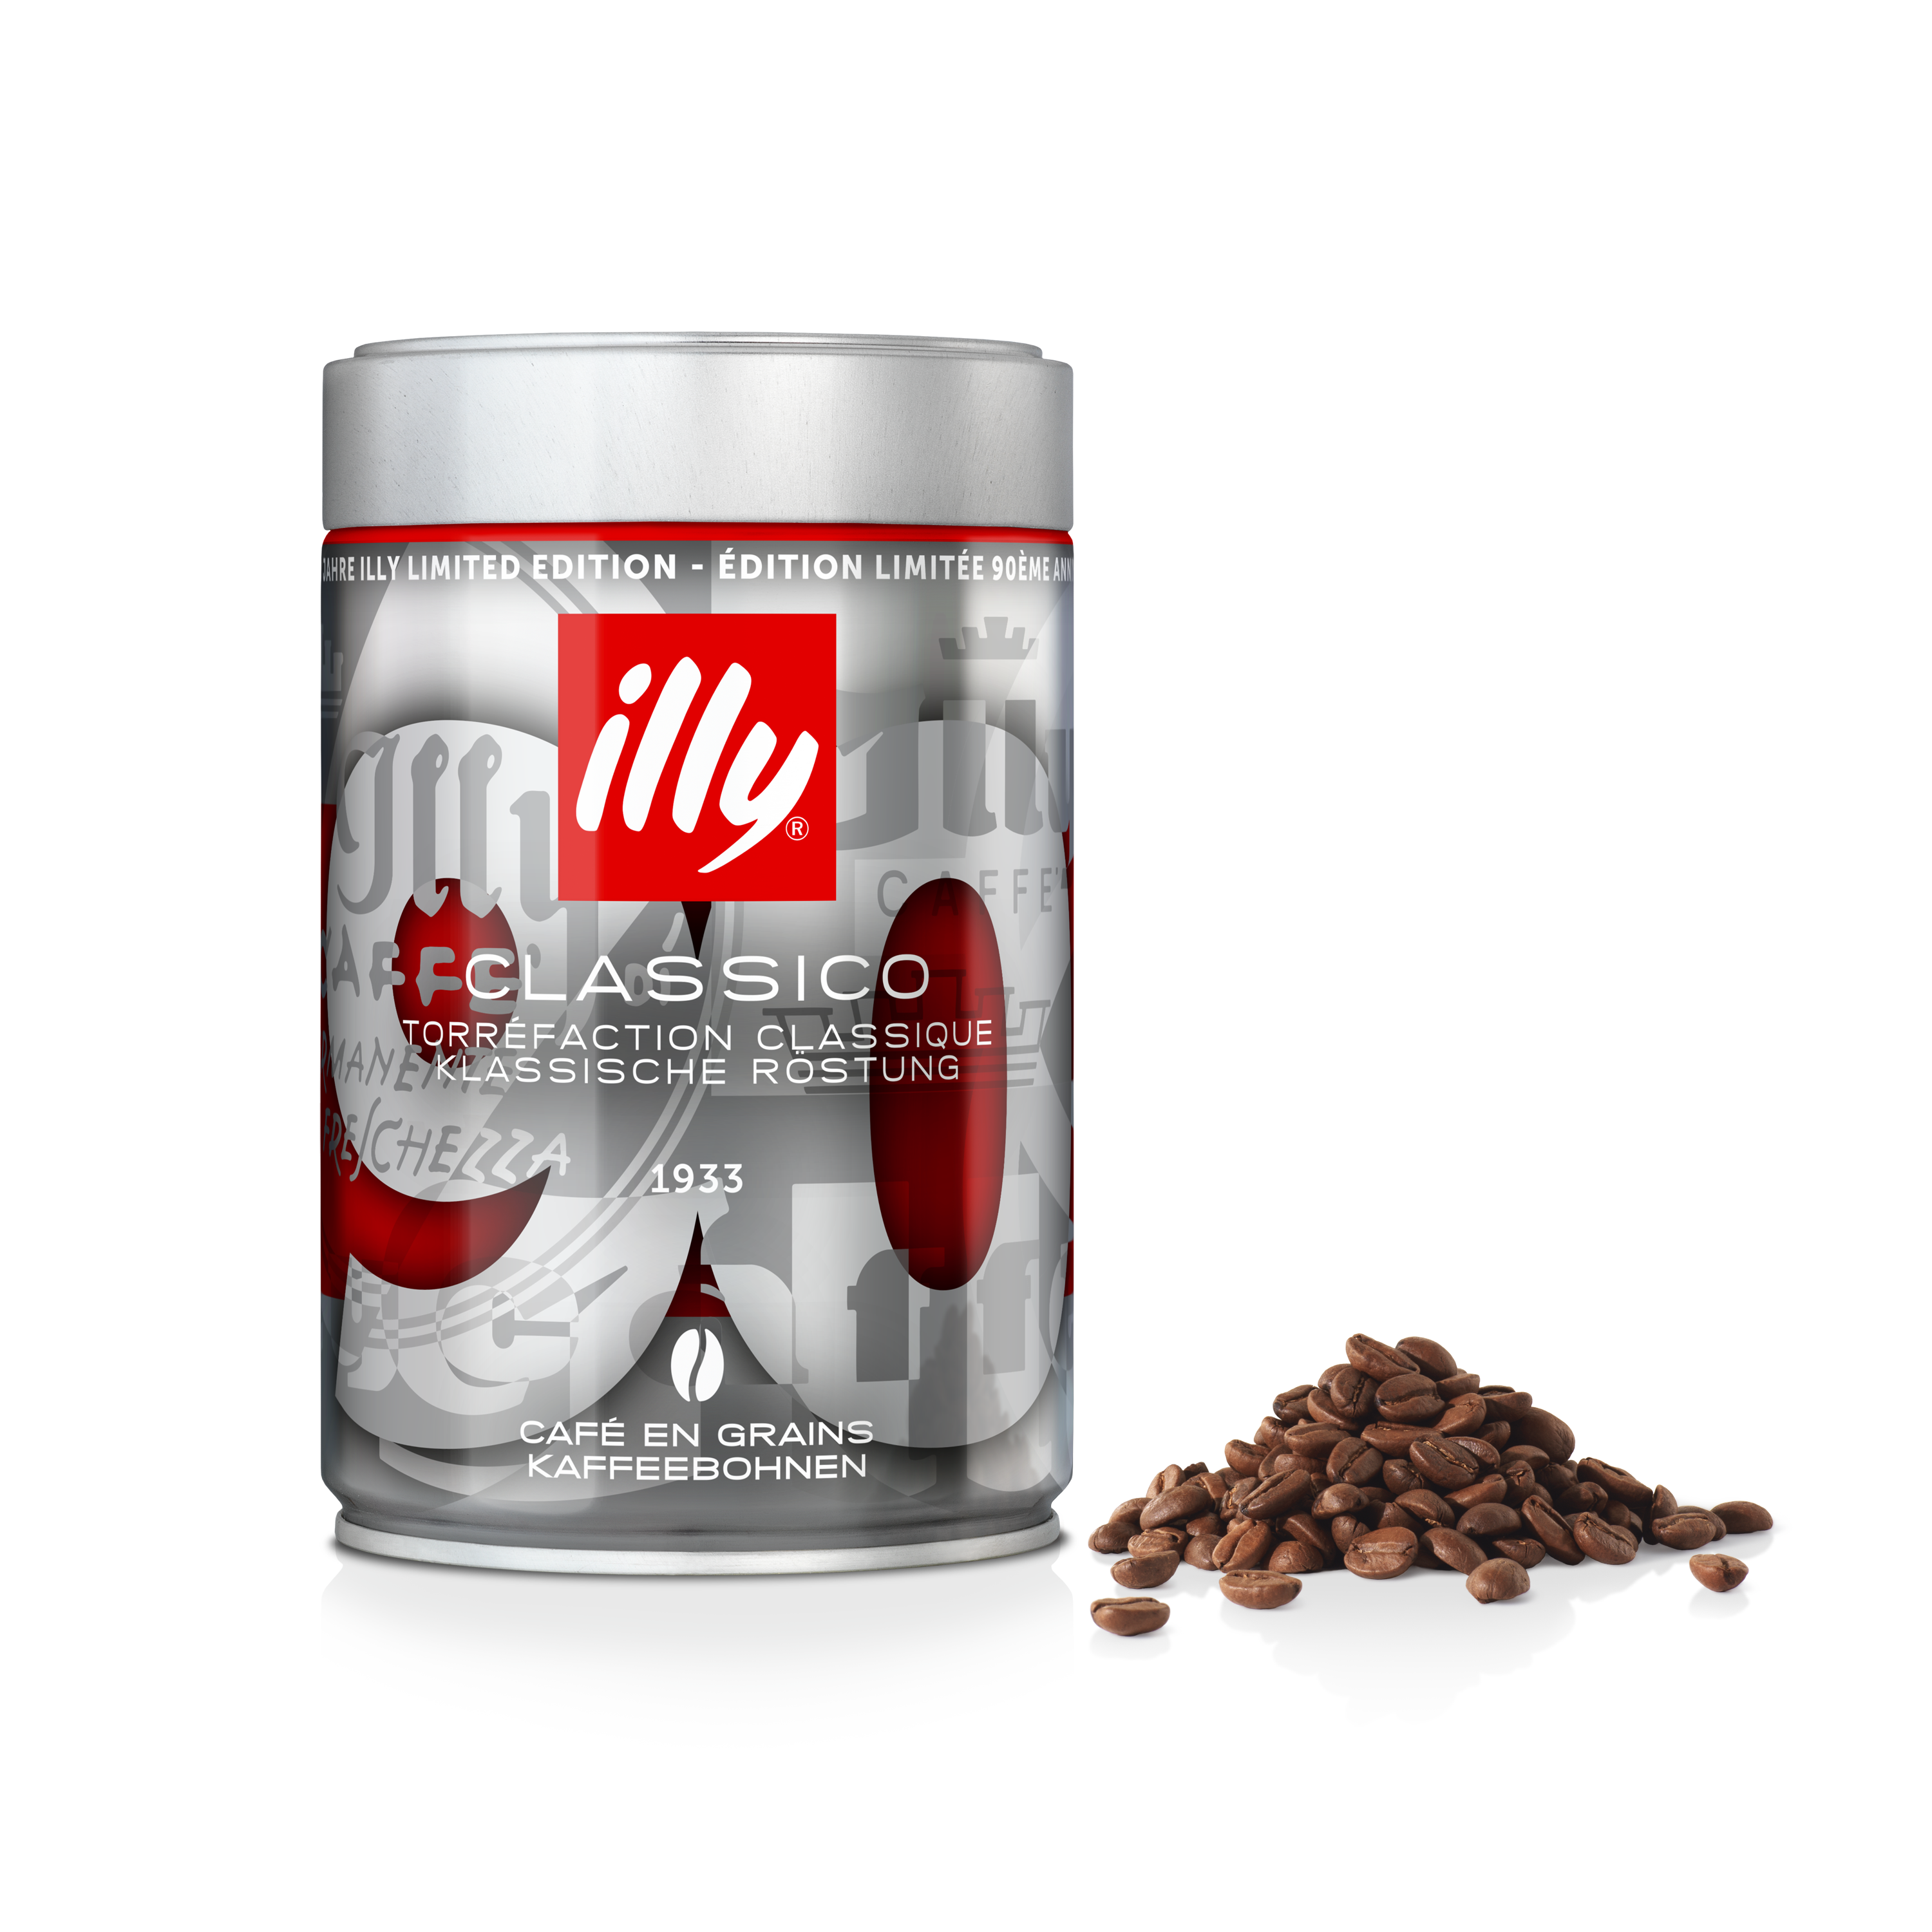 90-jähriges illy Jubiläum: Kaffeebohnen CLASSICO Limited Edition